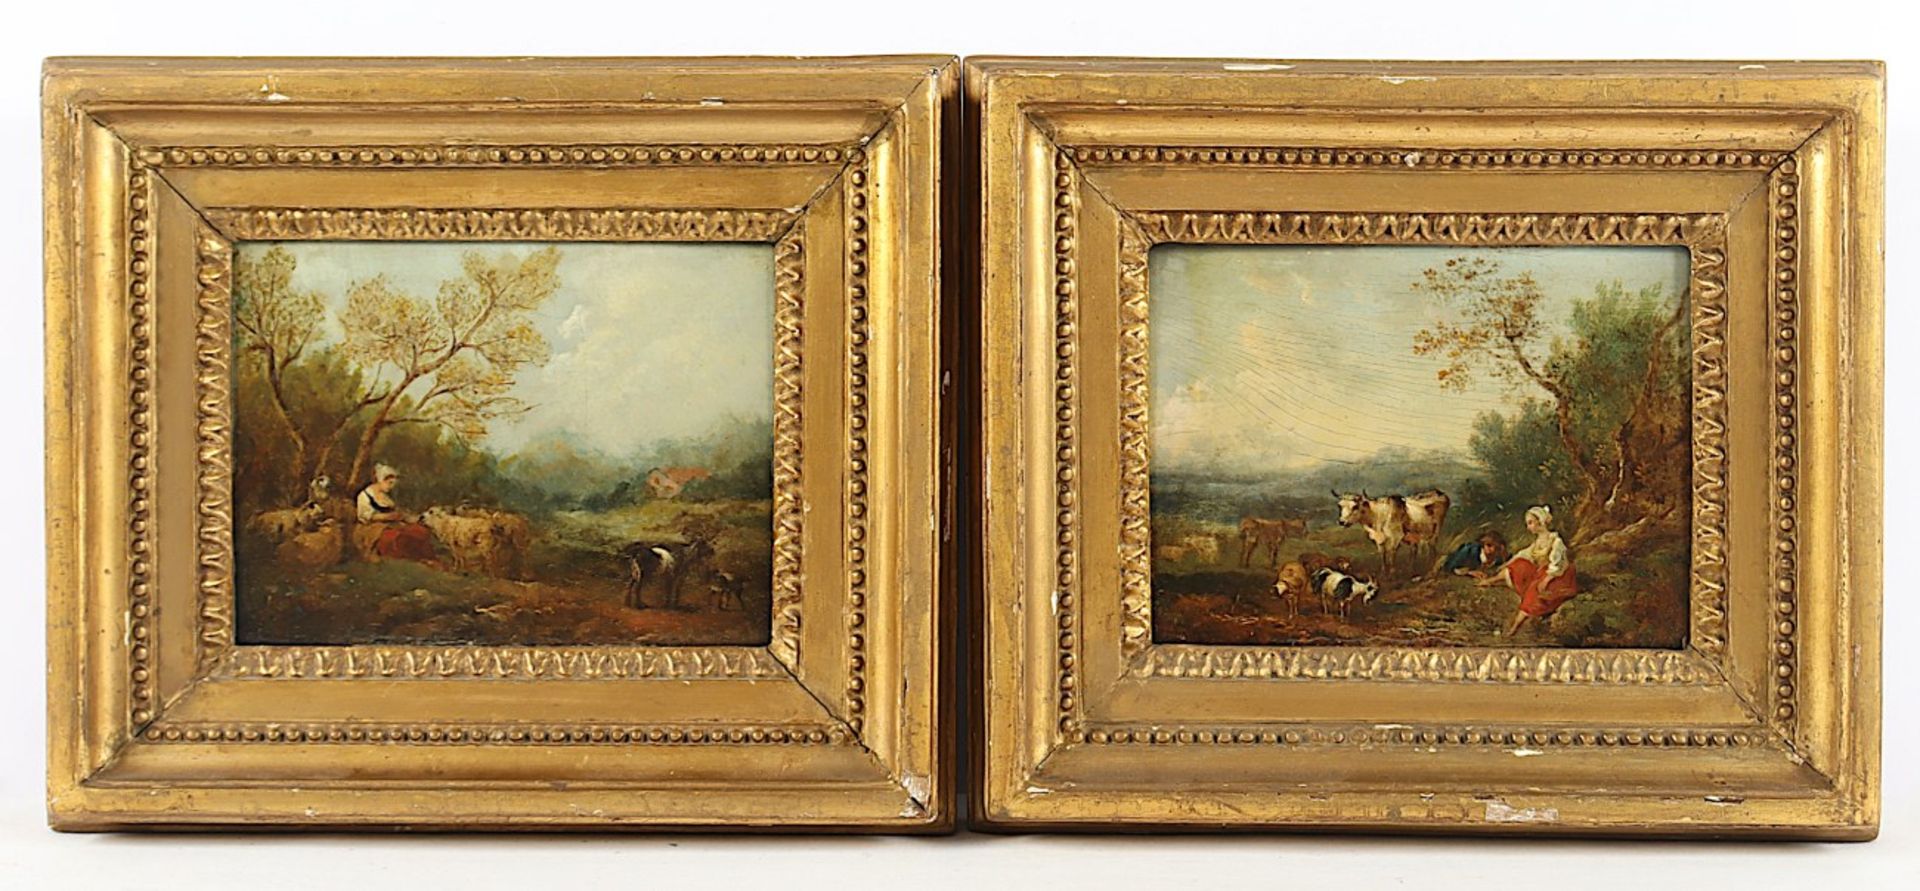 MEYER, Georg Friedrich (1735-1779), "Zwei bukolische Szenen", Öl/Holz, 12 x 16, R. 